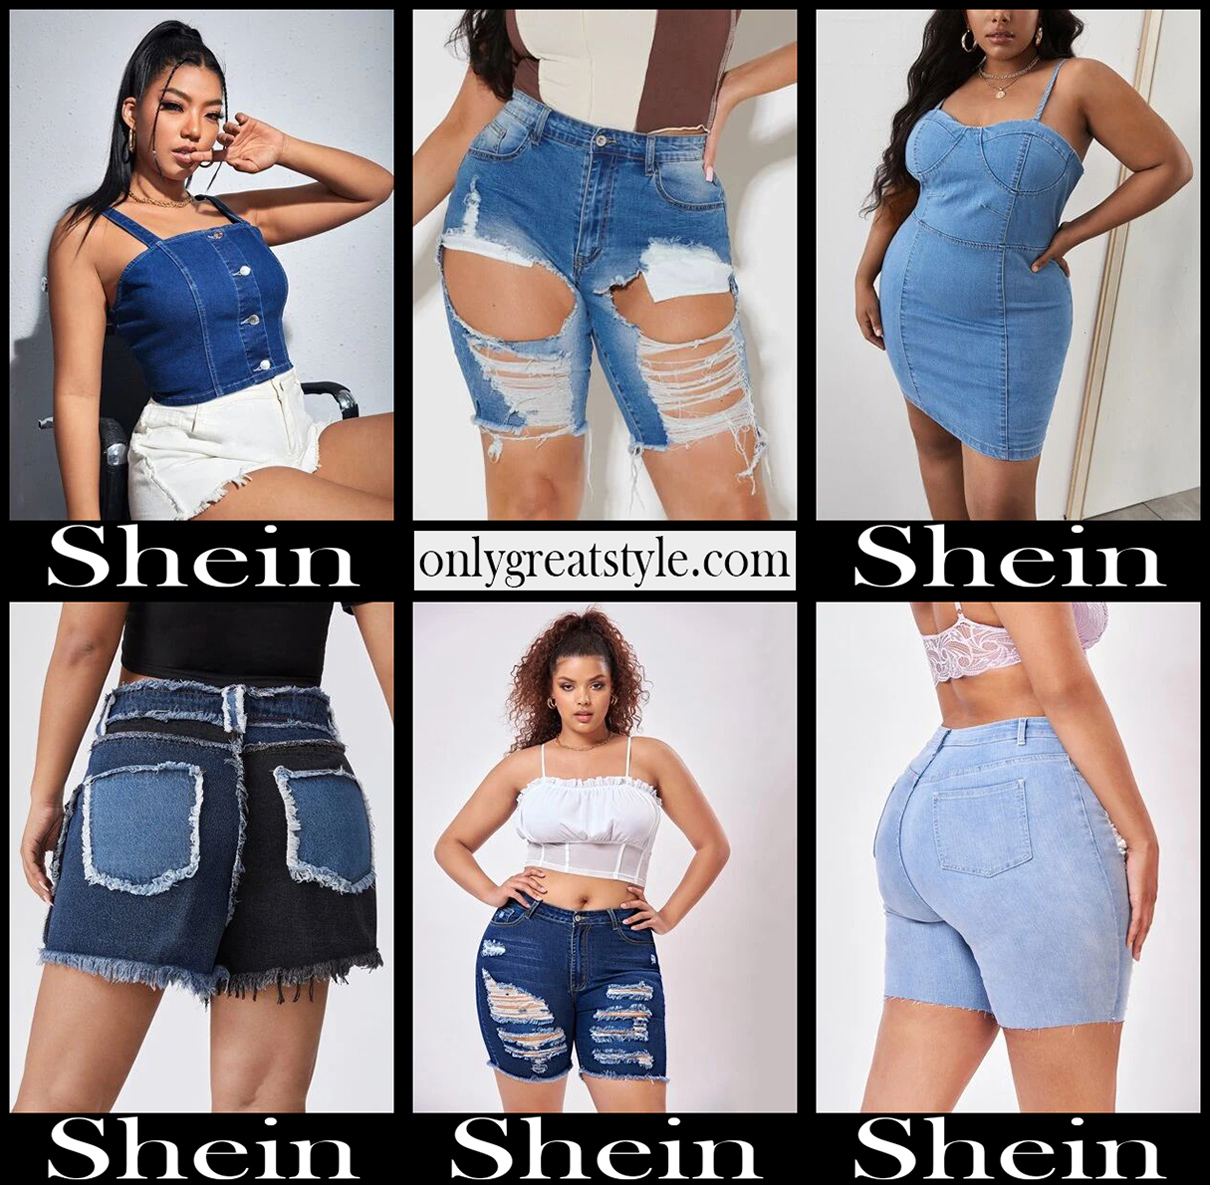 Shein curvy jeans plus size womens clothing denim